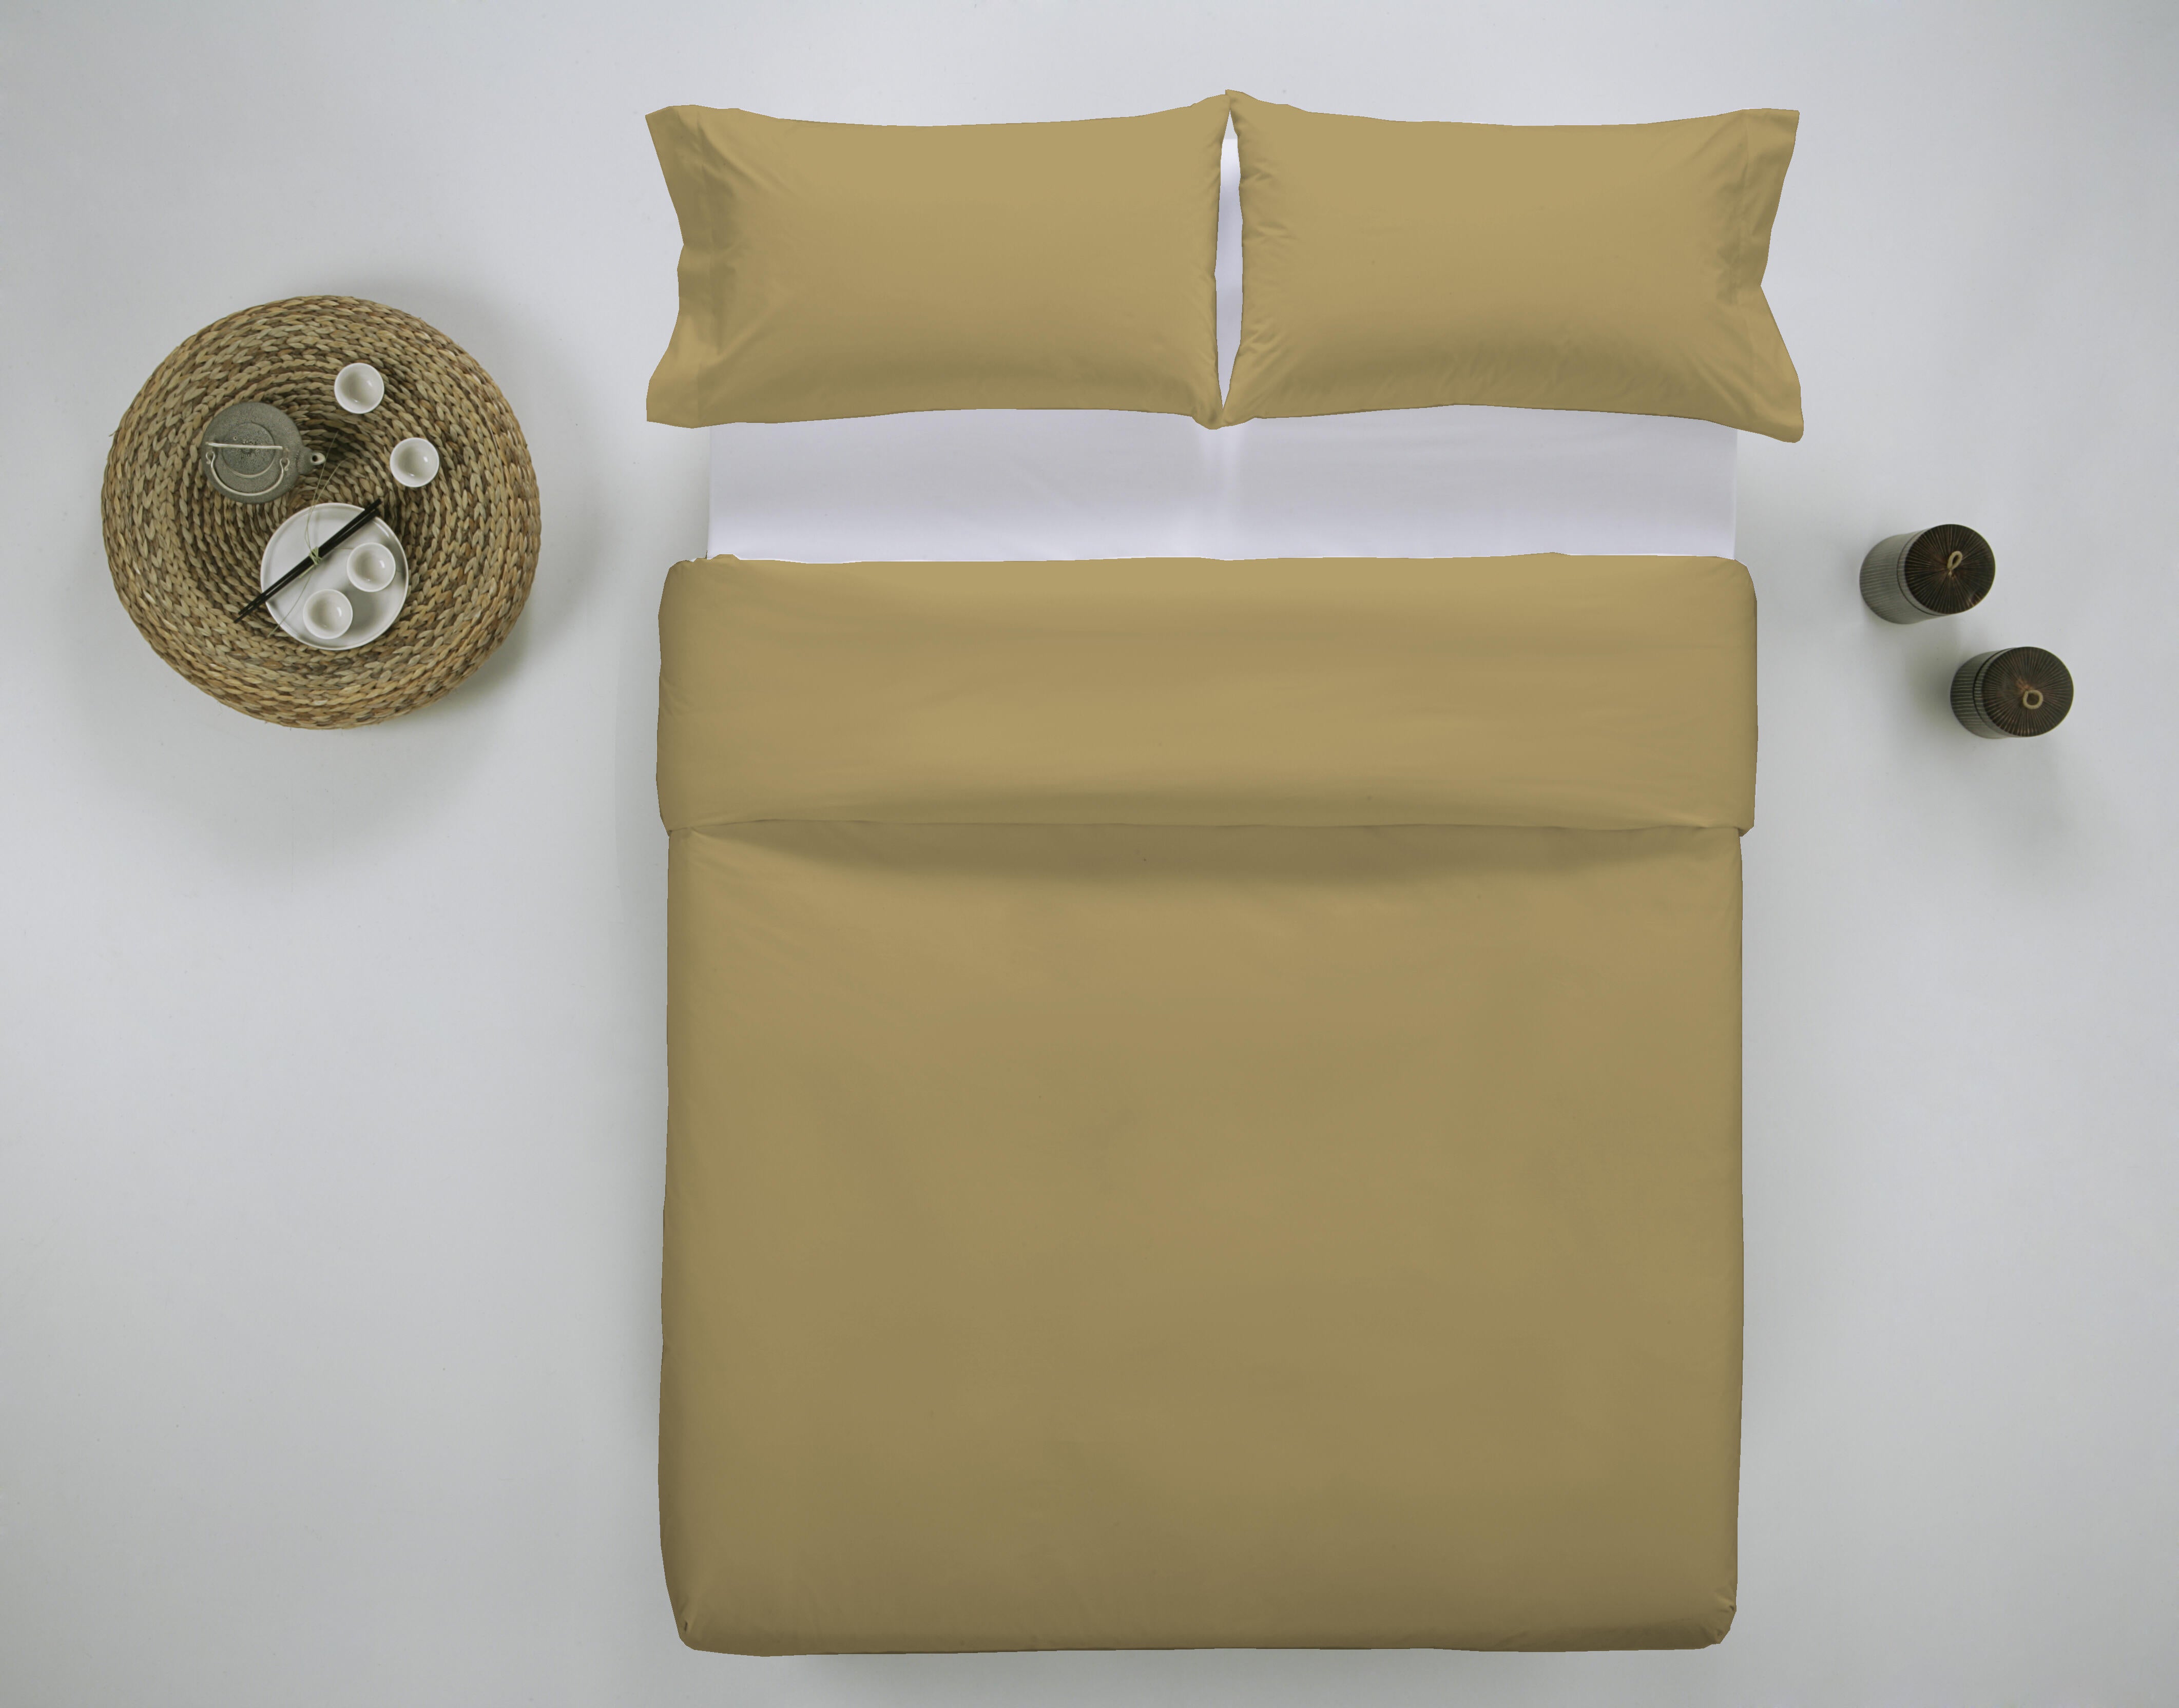 Funda nórdica wash grament lisa algodón 200 hilos amarillo mostaza cama 200 cm